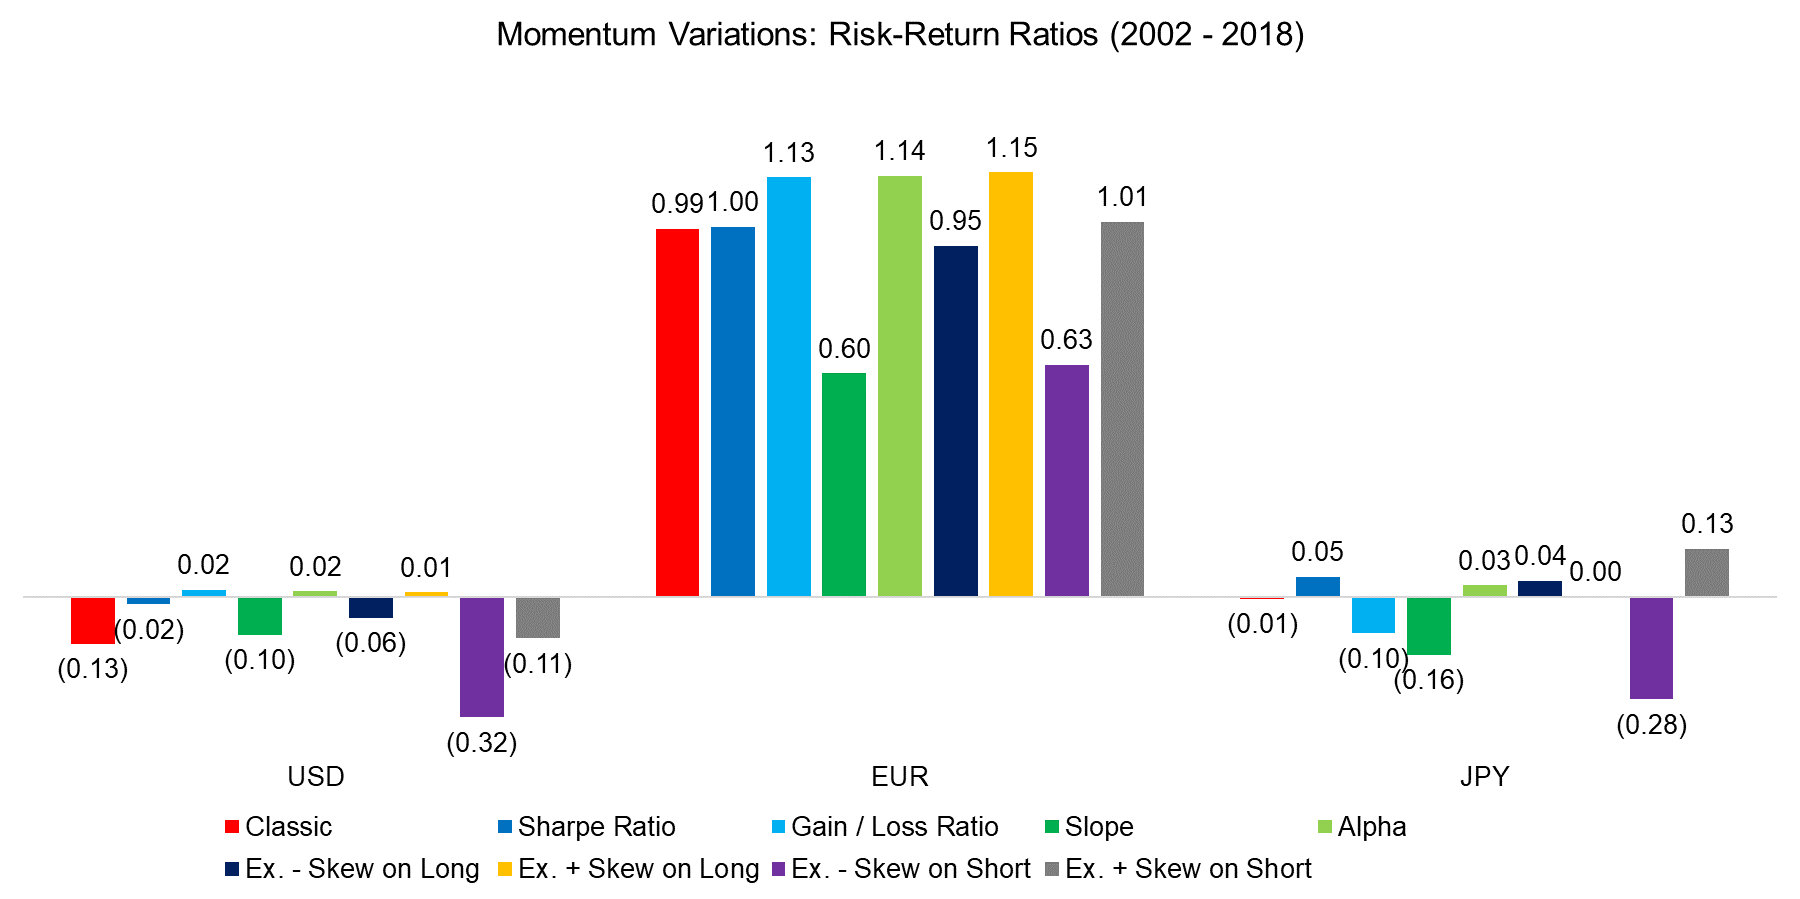 Momentum Variations Risk-Return Ratios (2002 - 2018)